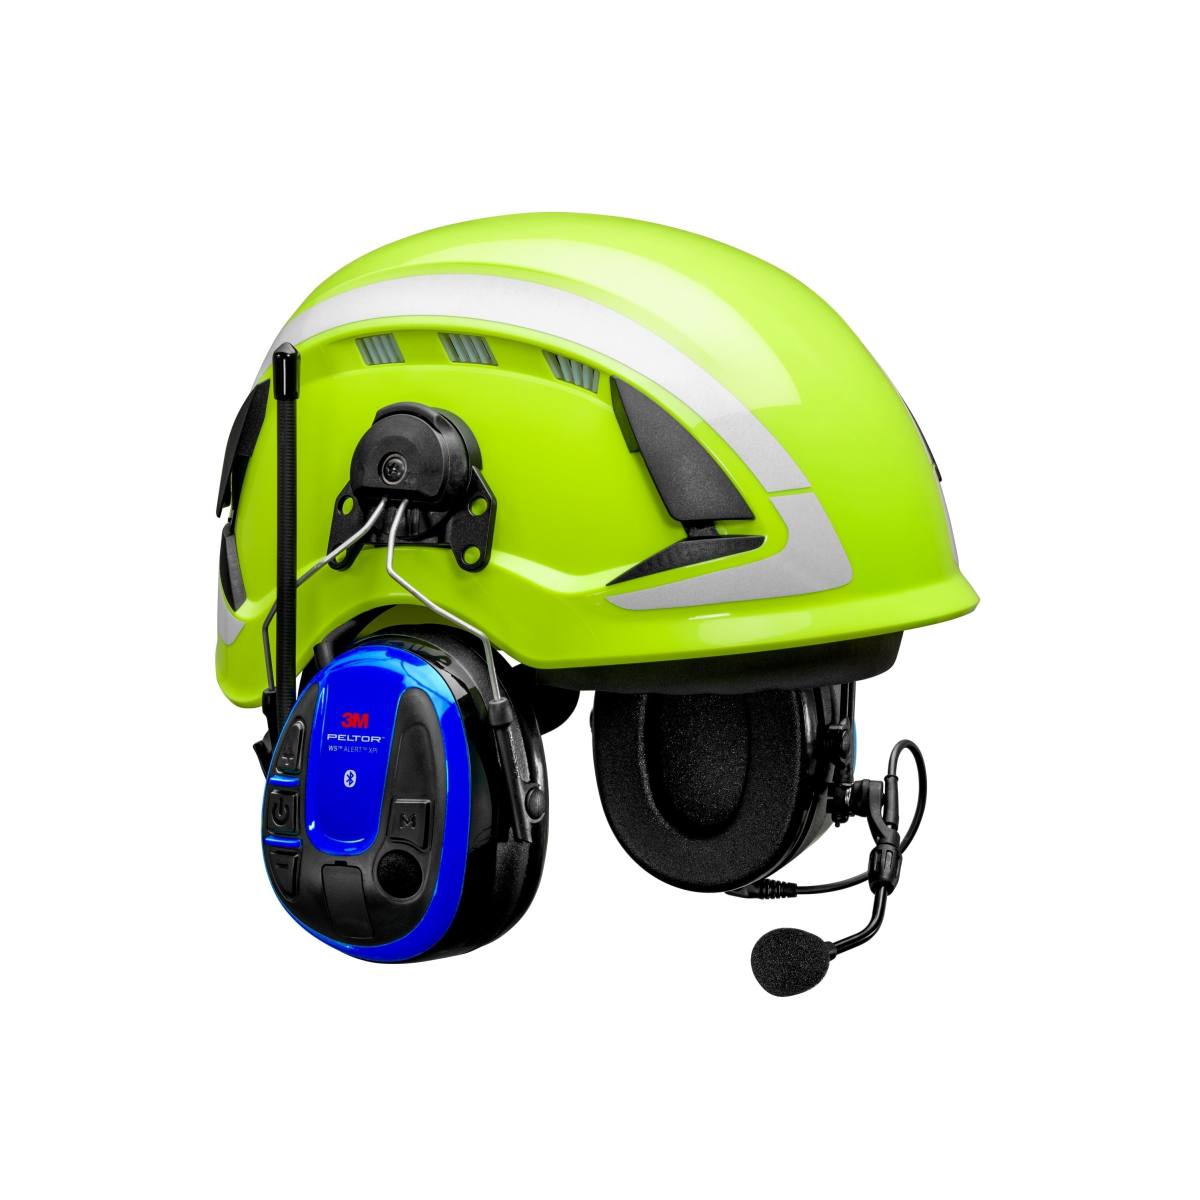 3M PELTOR WS ALERT XPI headset, 30 dB, Bluetooth MultiPoint technology, helmet mount, MRX21P3E3WS6